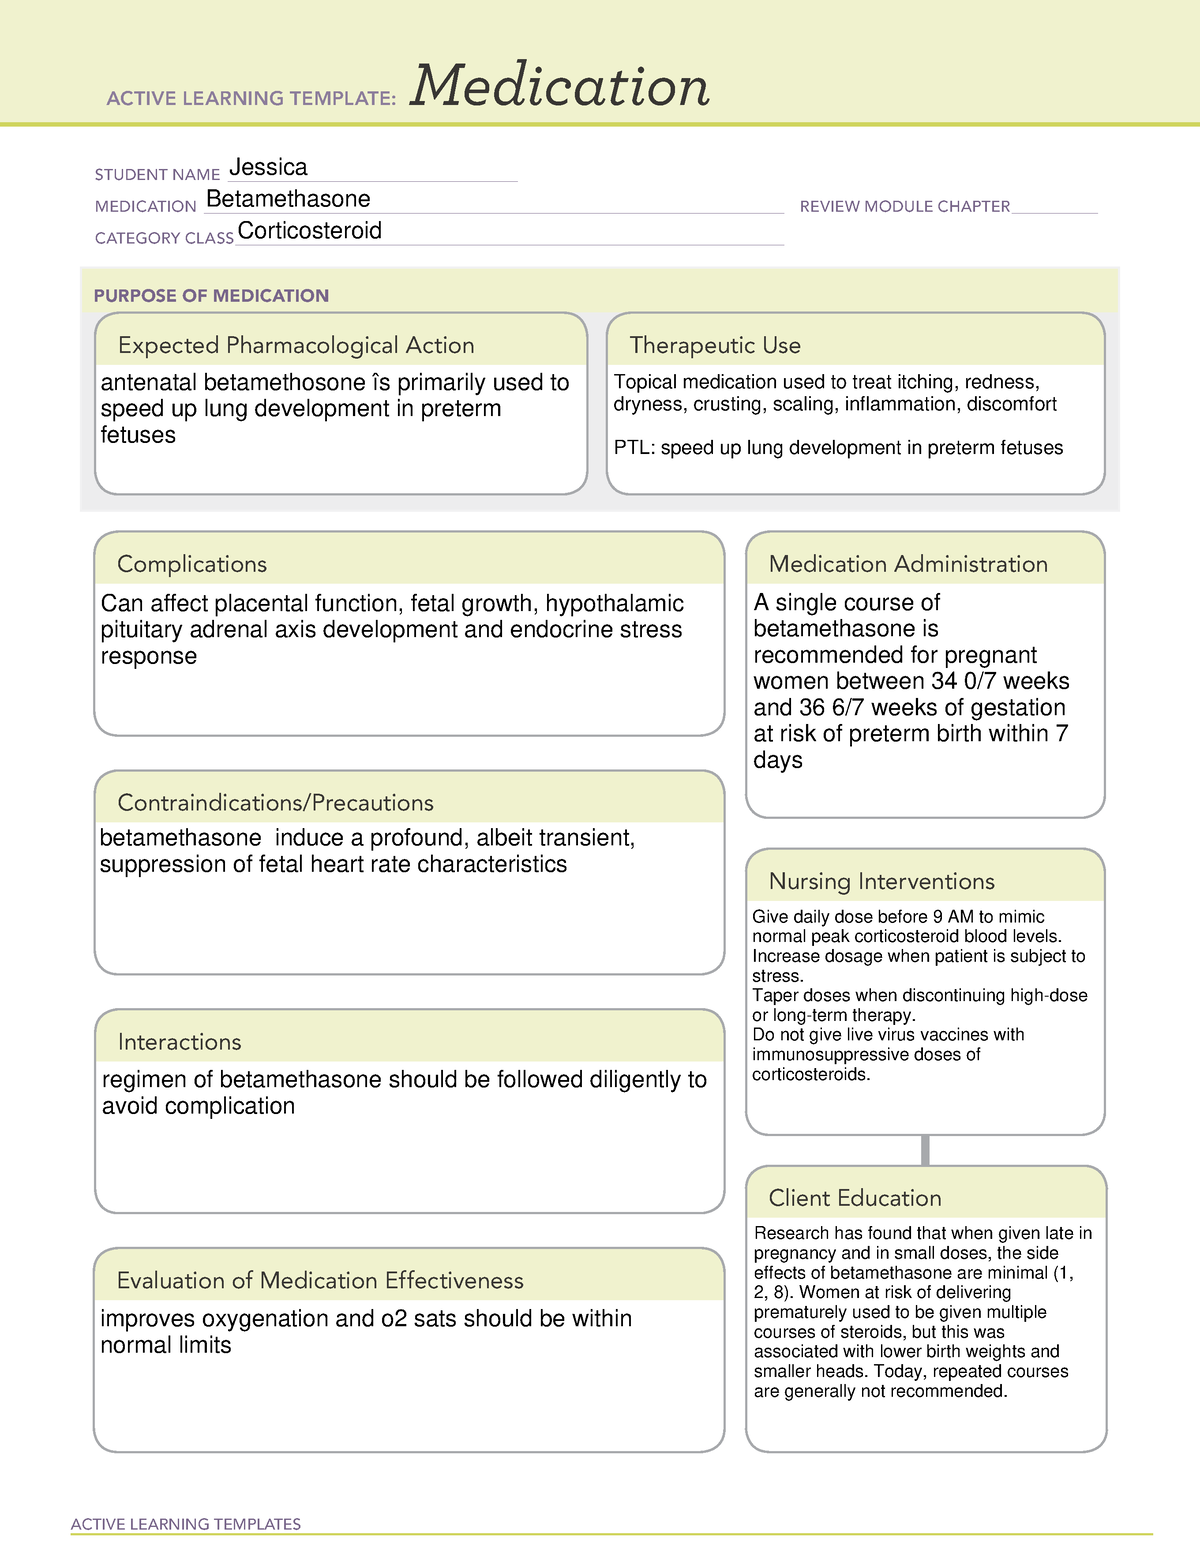 betamethasone-ati-medication-template-active-learning-templates